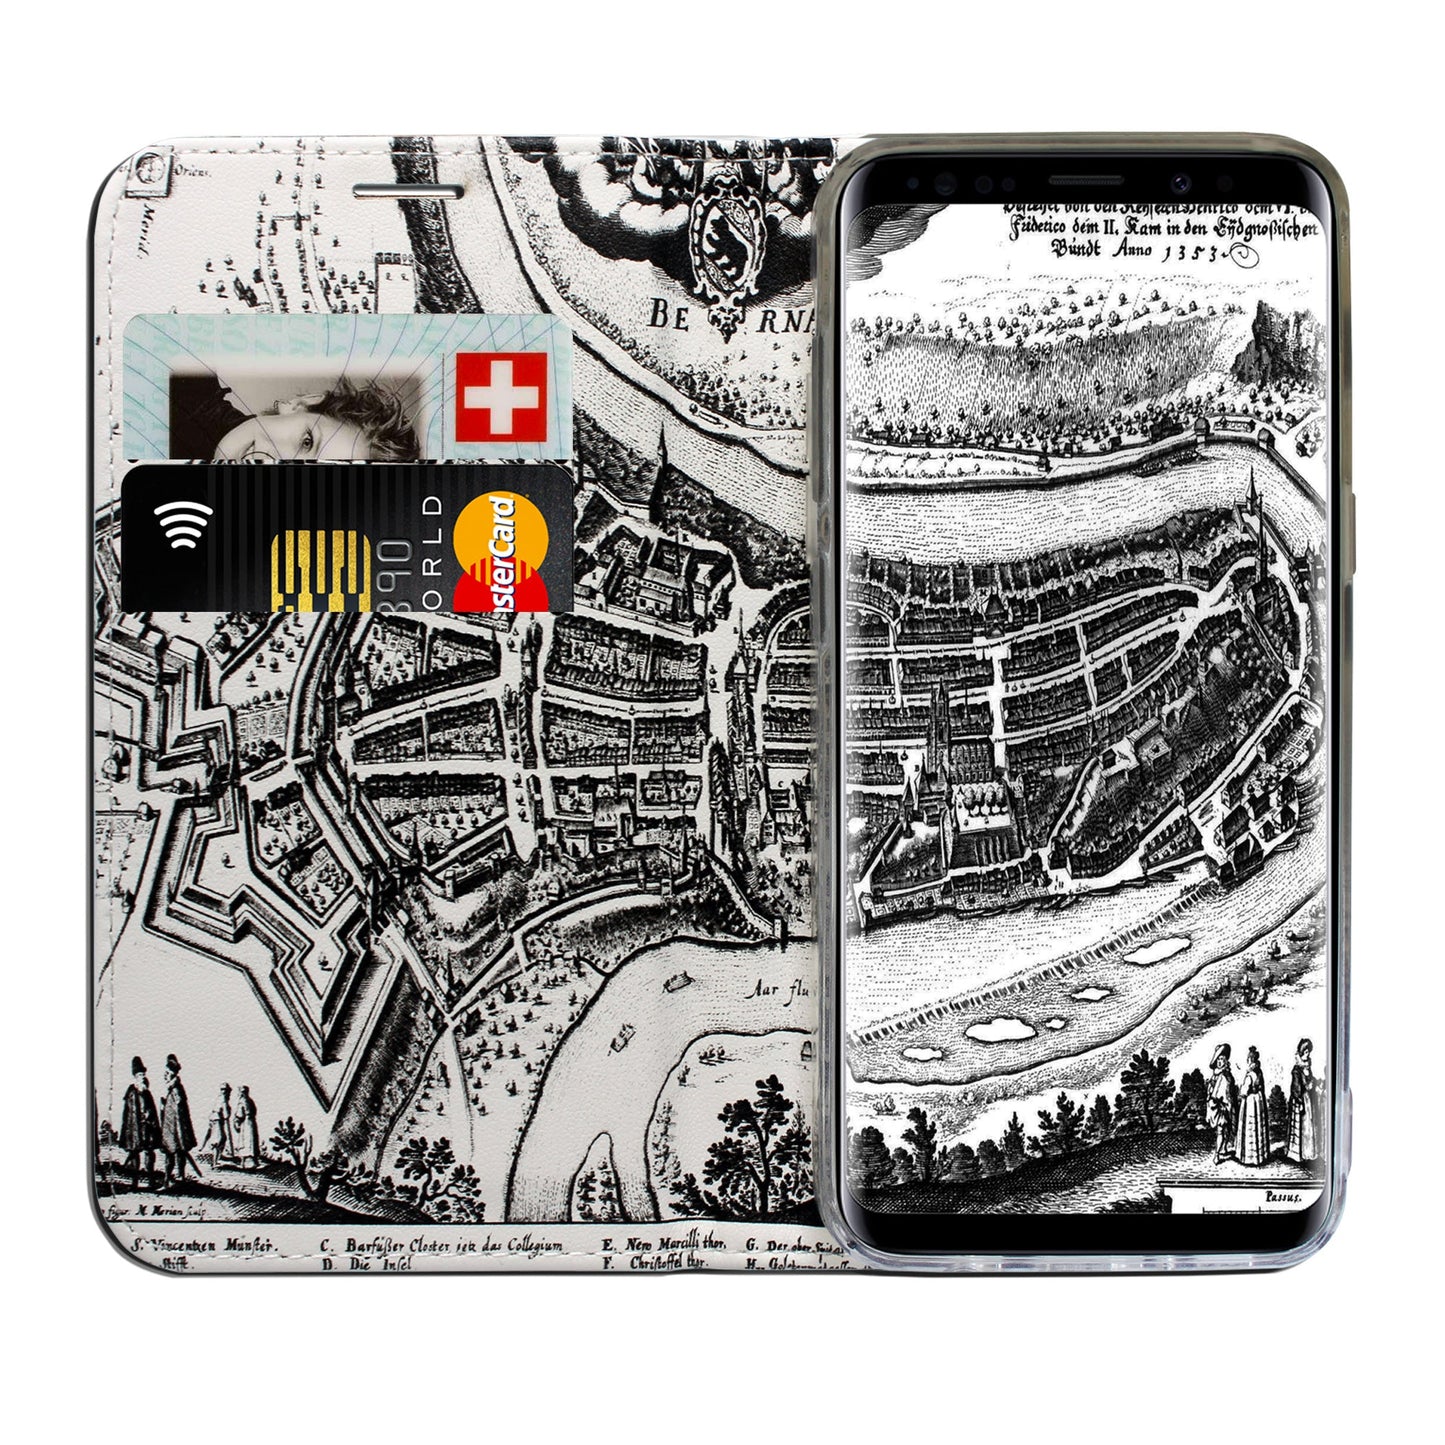 Bern City Panorama Case for Samsung Galaxy S9 Plus